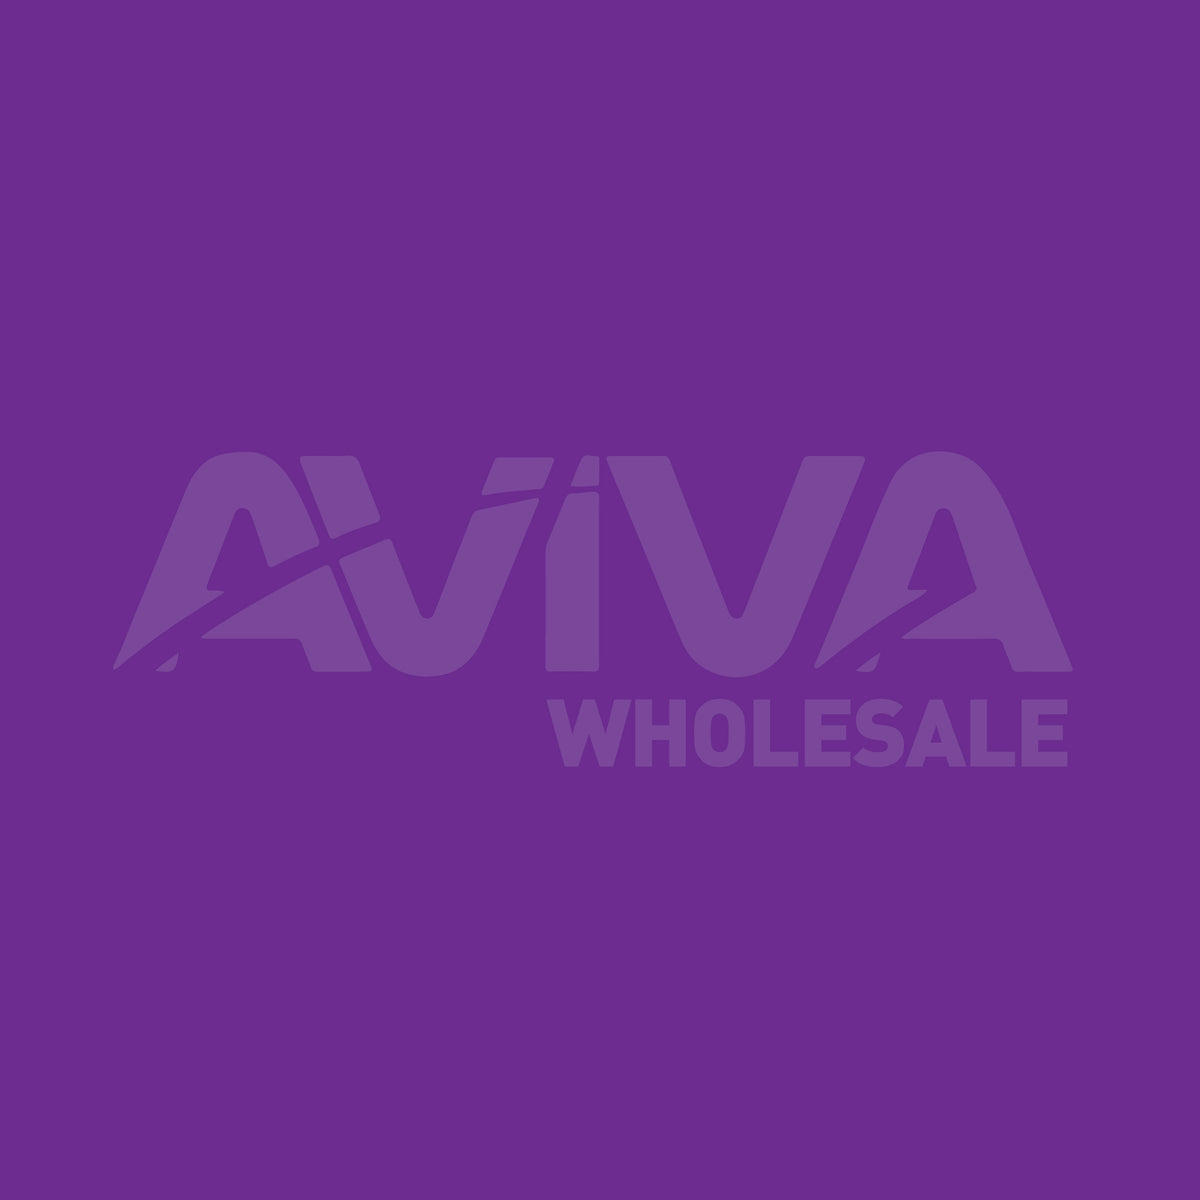 Ultra Flex Shimmer Silver 20” wide Heat TRANSFER Vinyl for T-Shirt and –  Aviva Wholesale